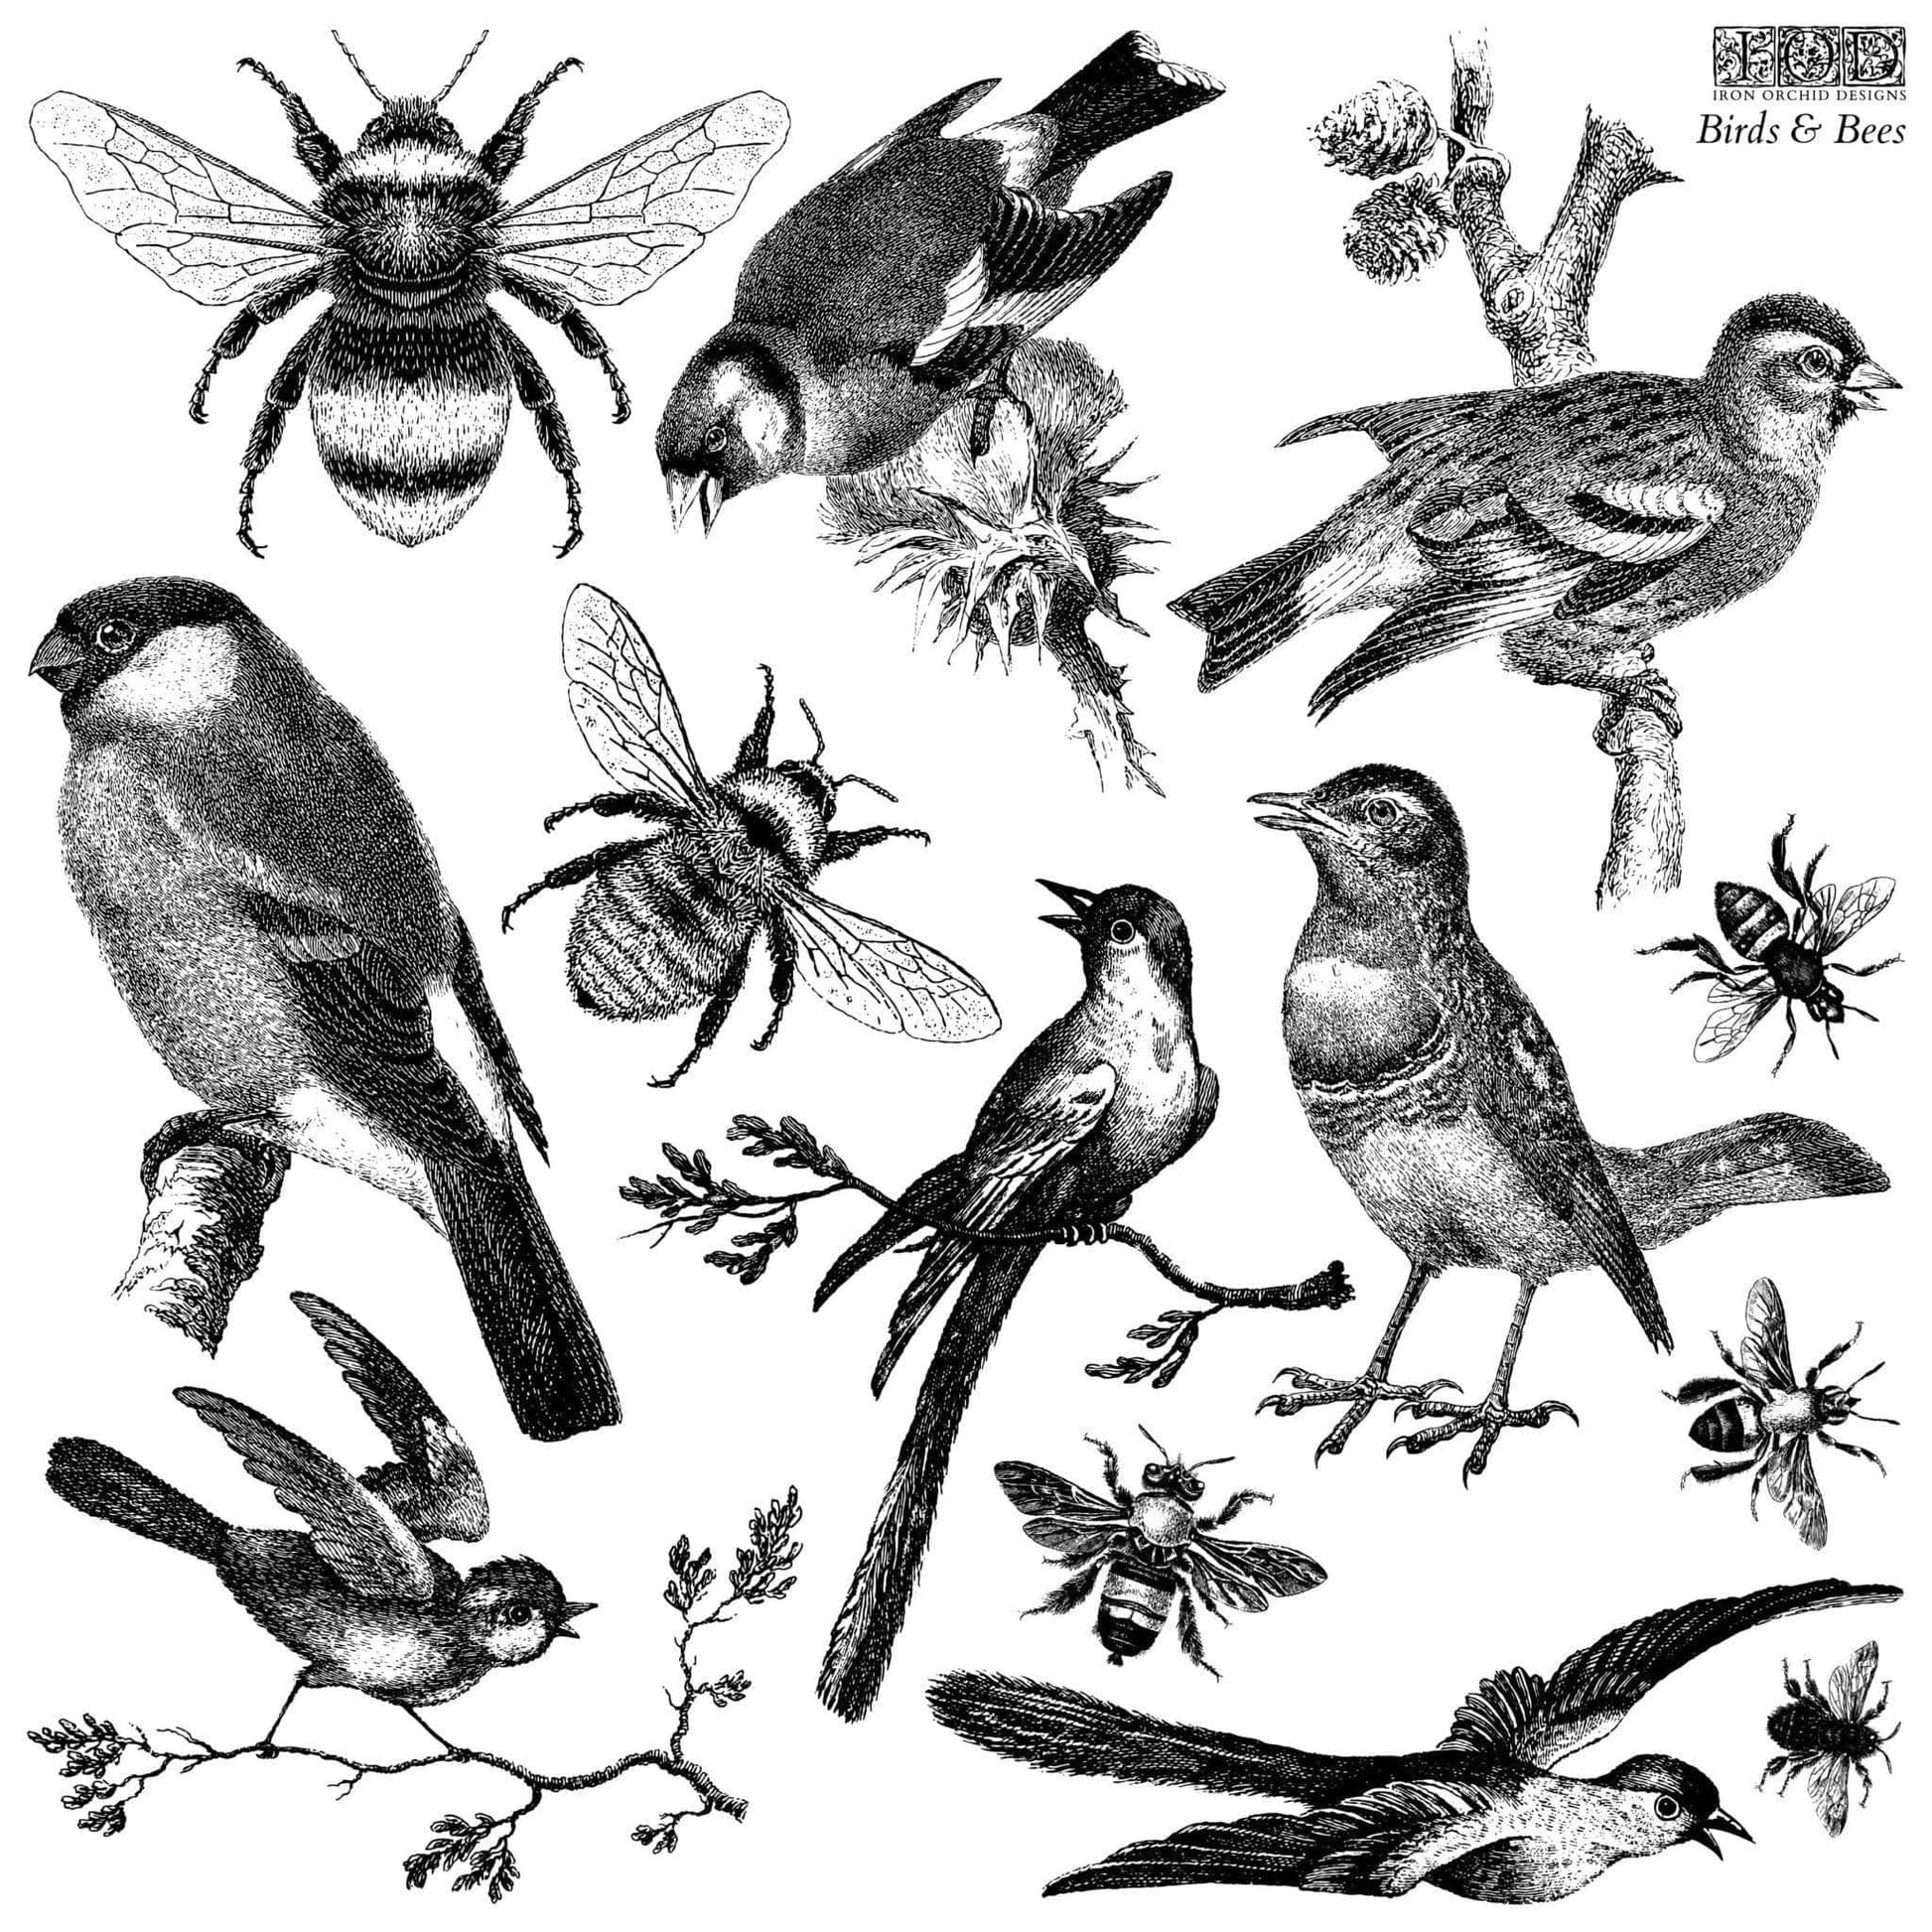 The Owl Box Birds & Bees 12x12 Decor Stamp